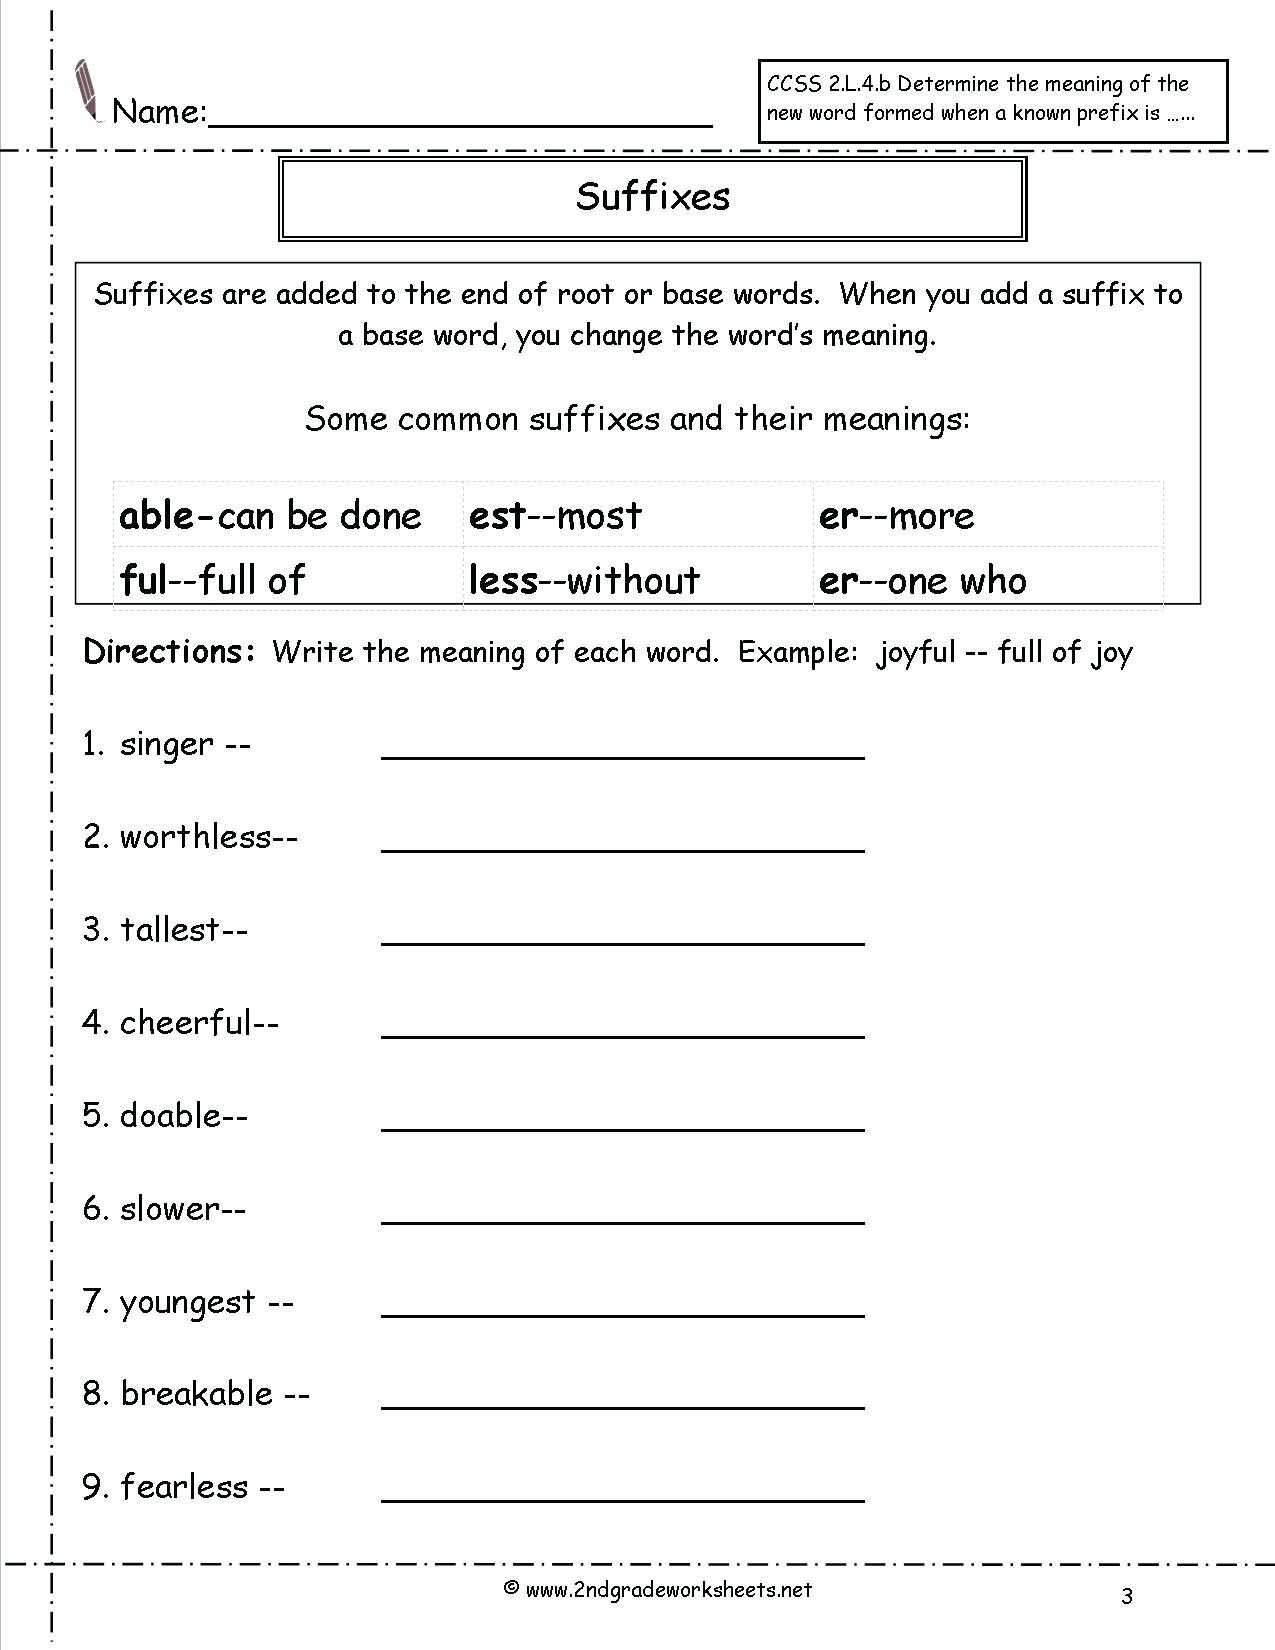 Suffixes Worksheet 3rd Grade 3rd Grade Prefixes and Suffixes Worksheets Whats the Prefix